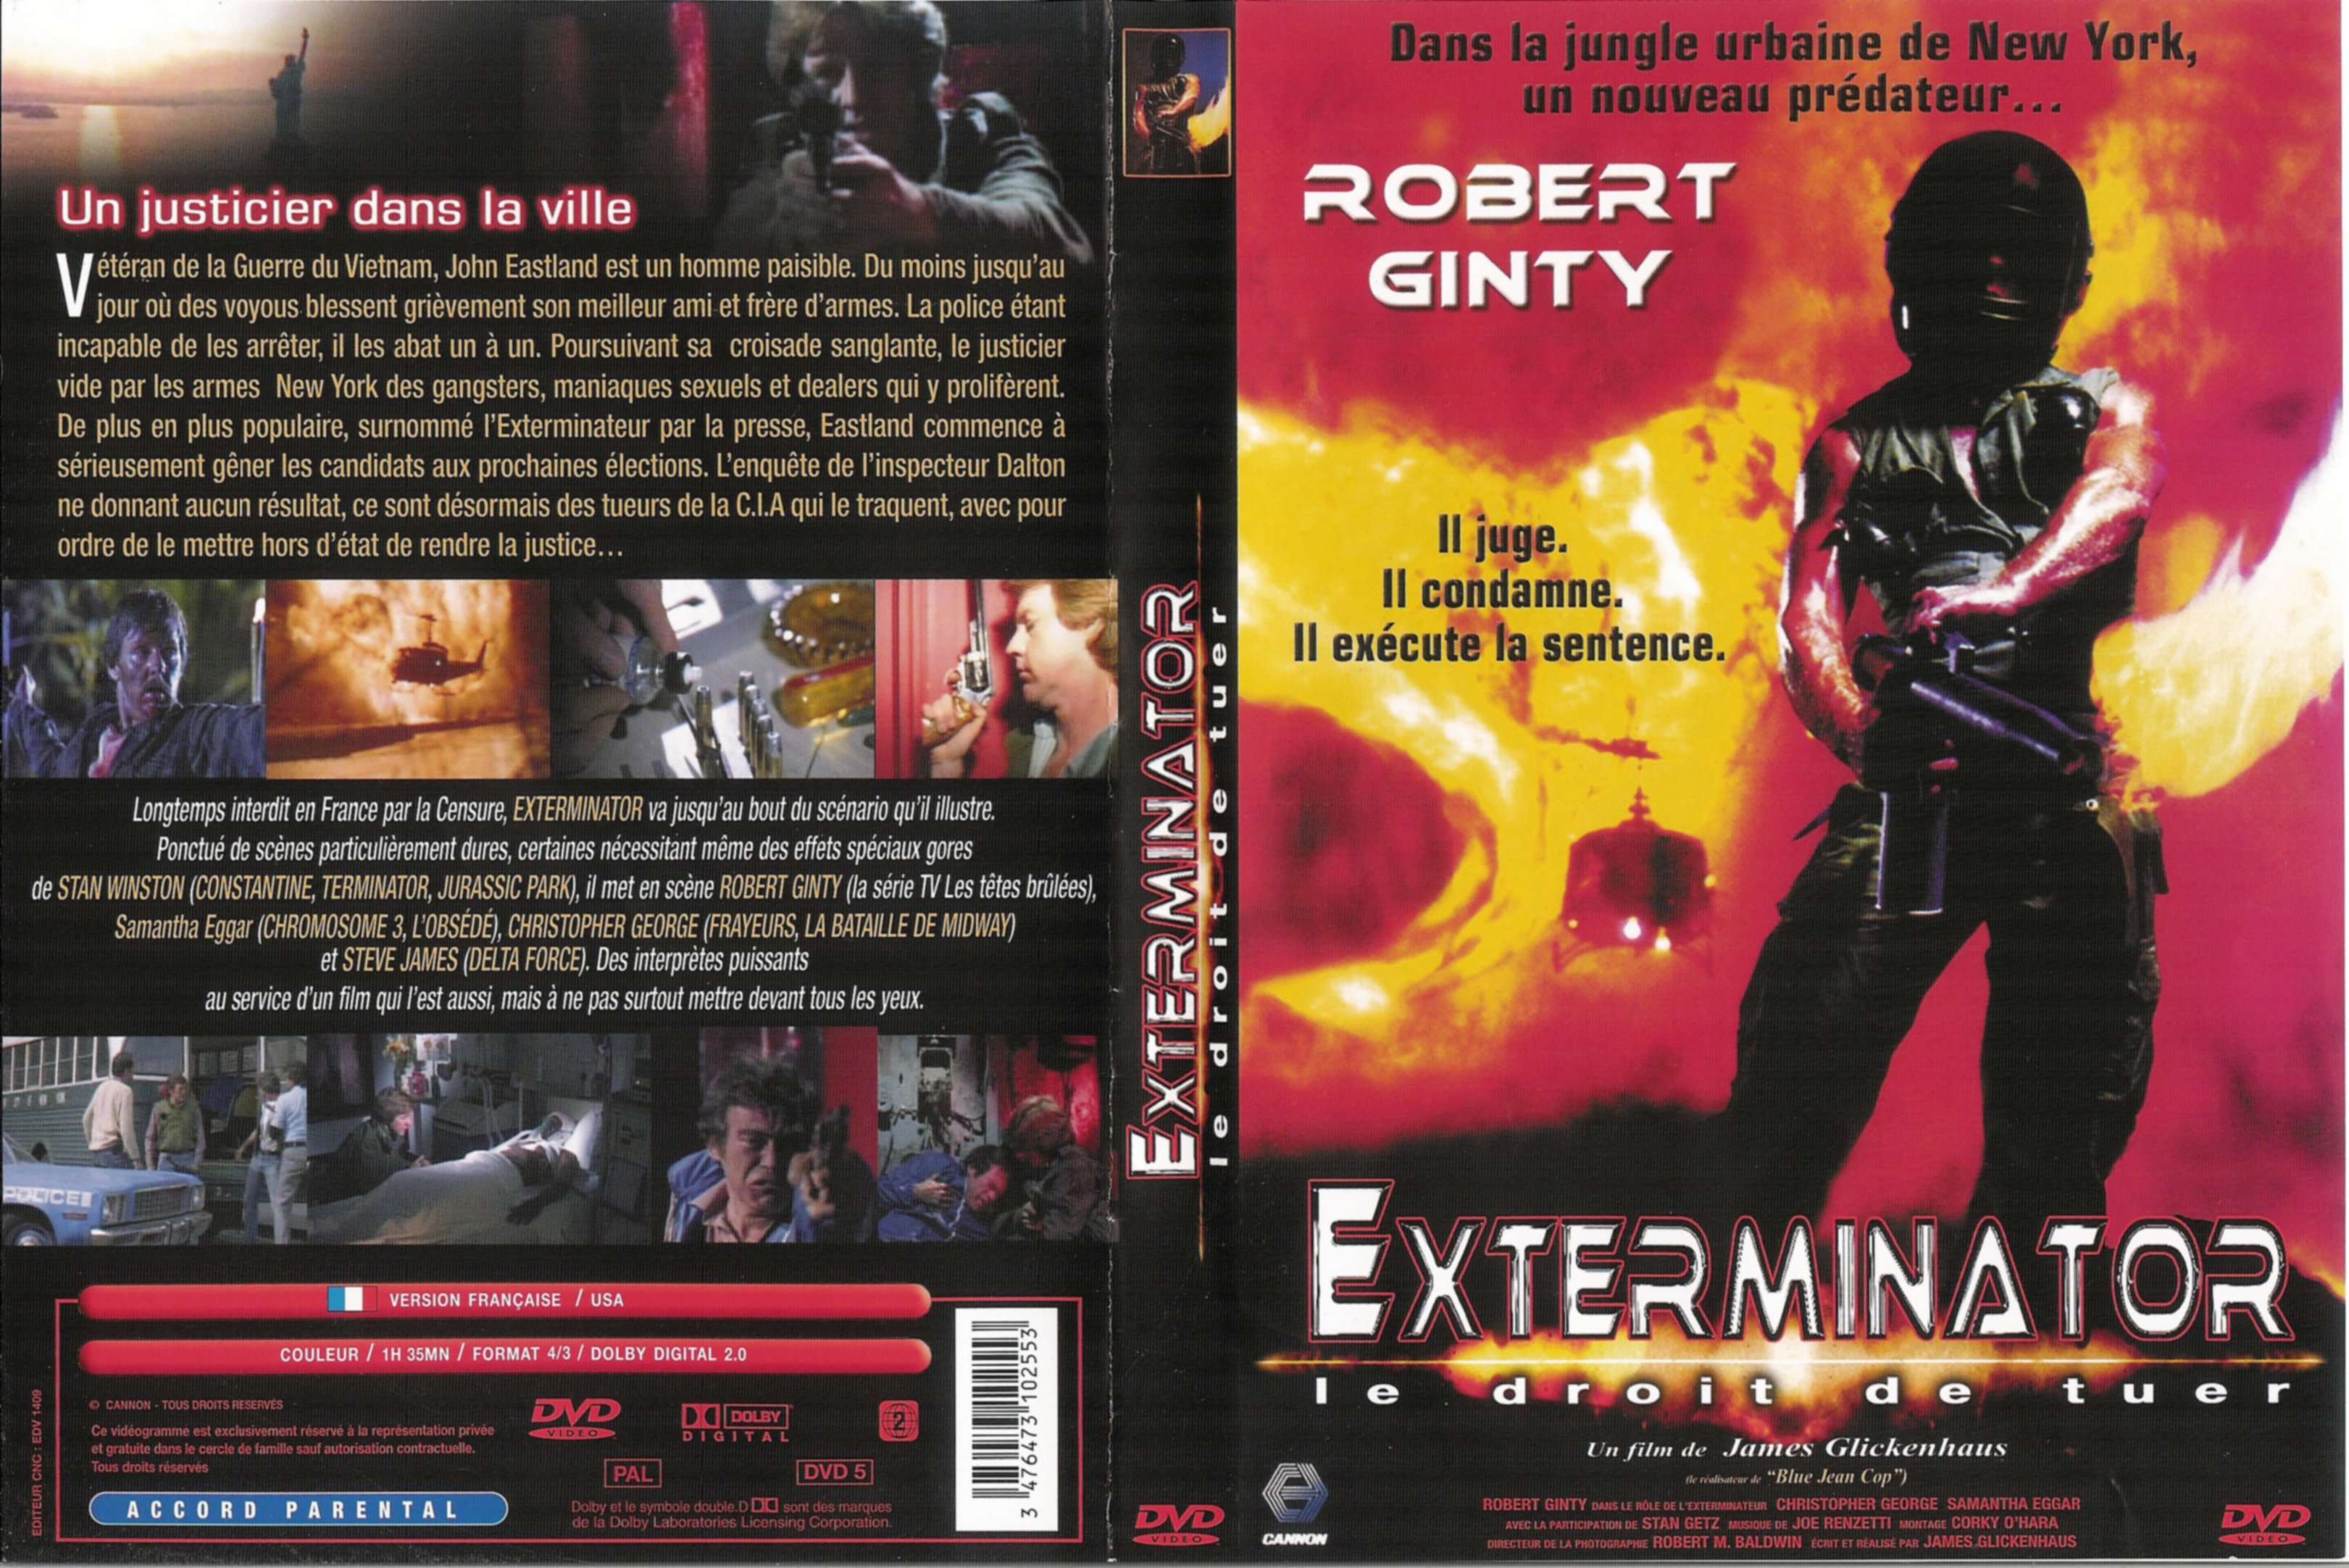 Jaquette DVD Exterminator